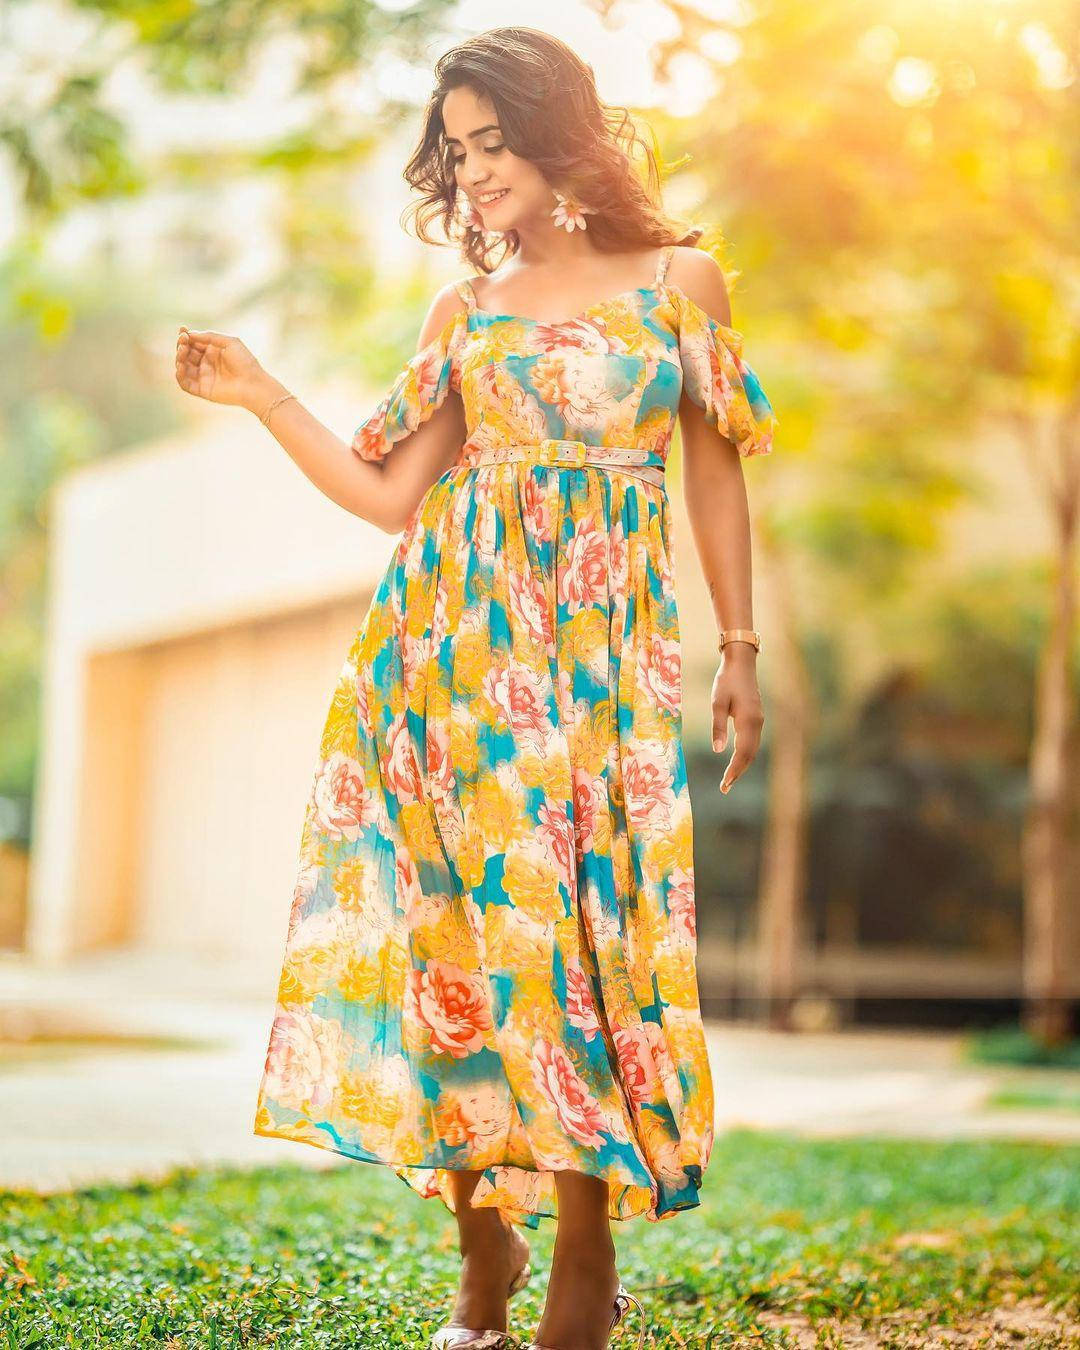 Nisha Guragain Captivating in Yellow Floral Dress Wallpaper